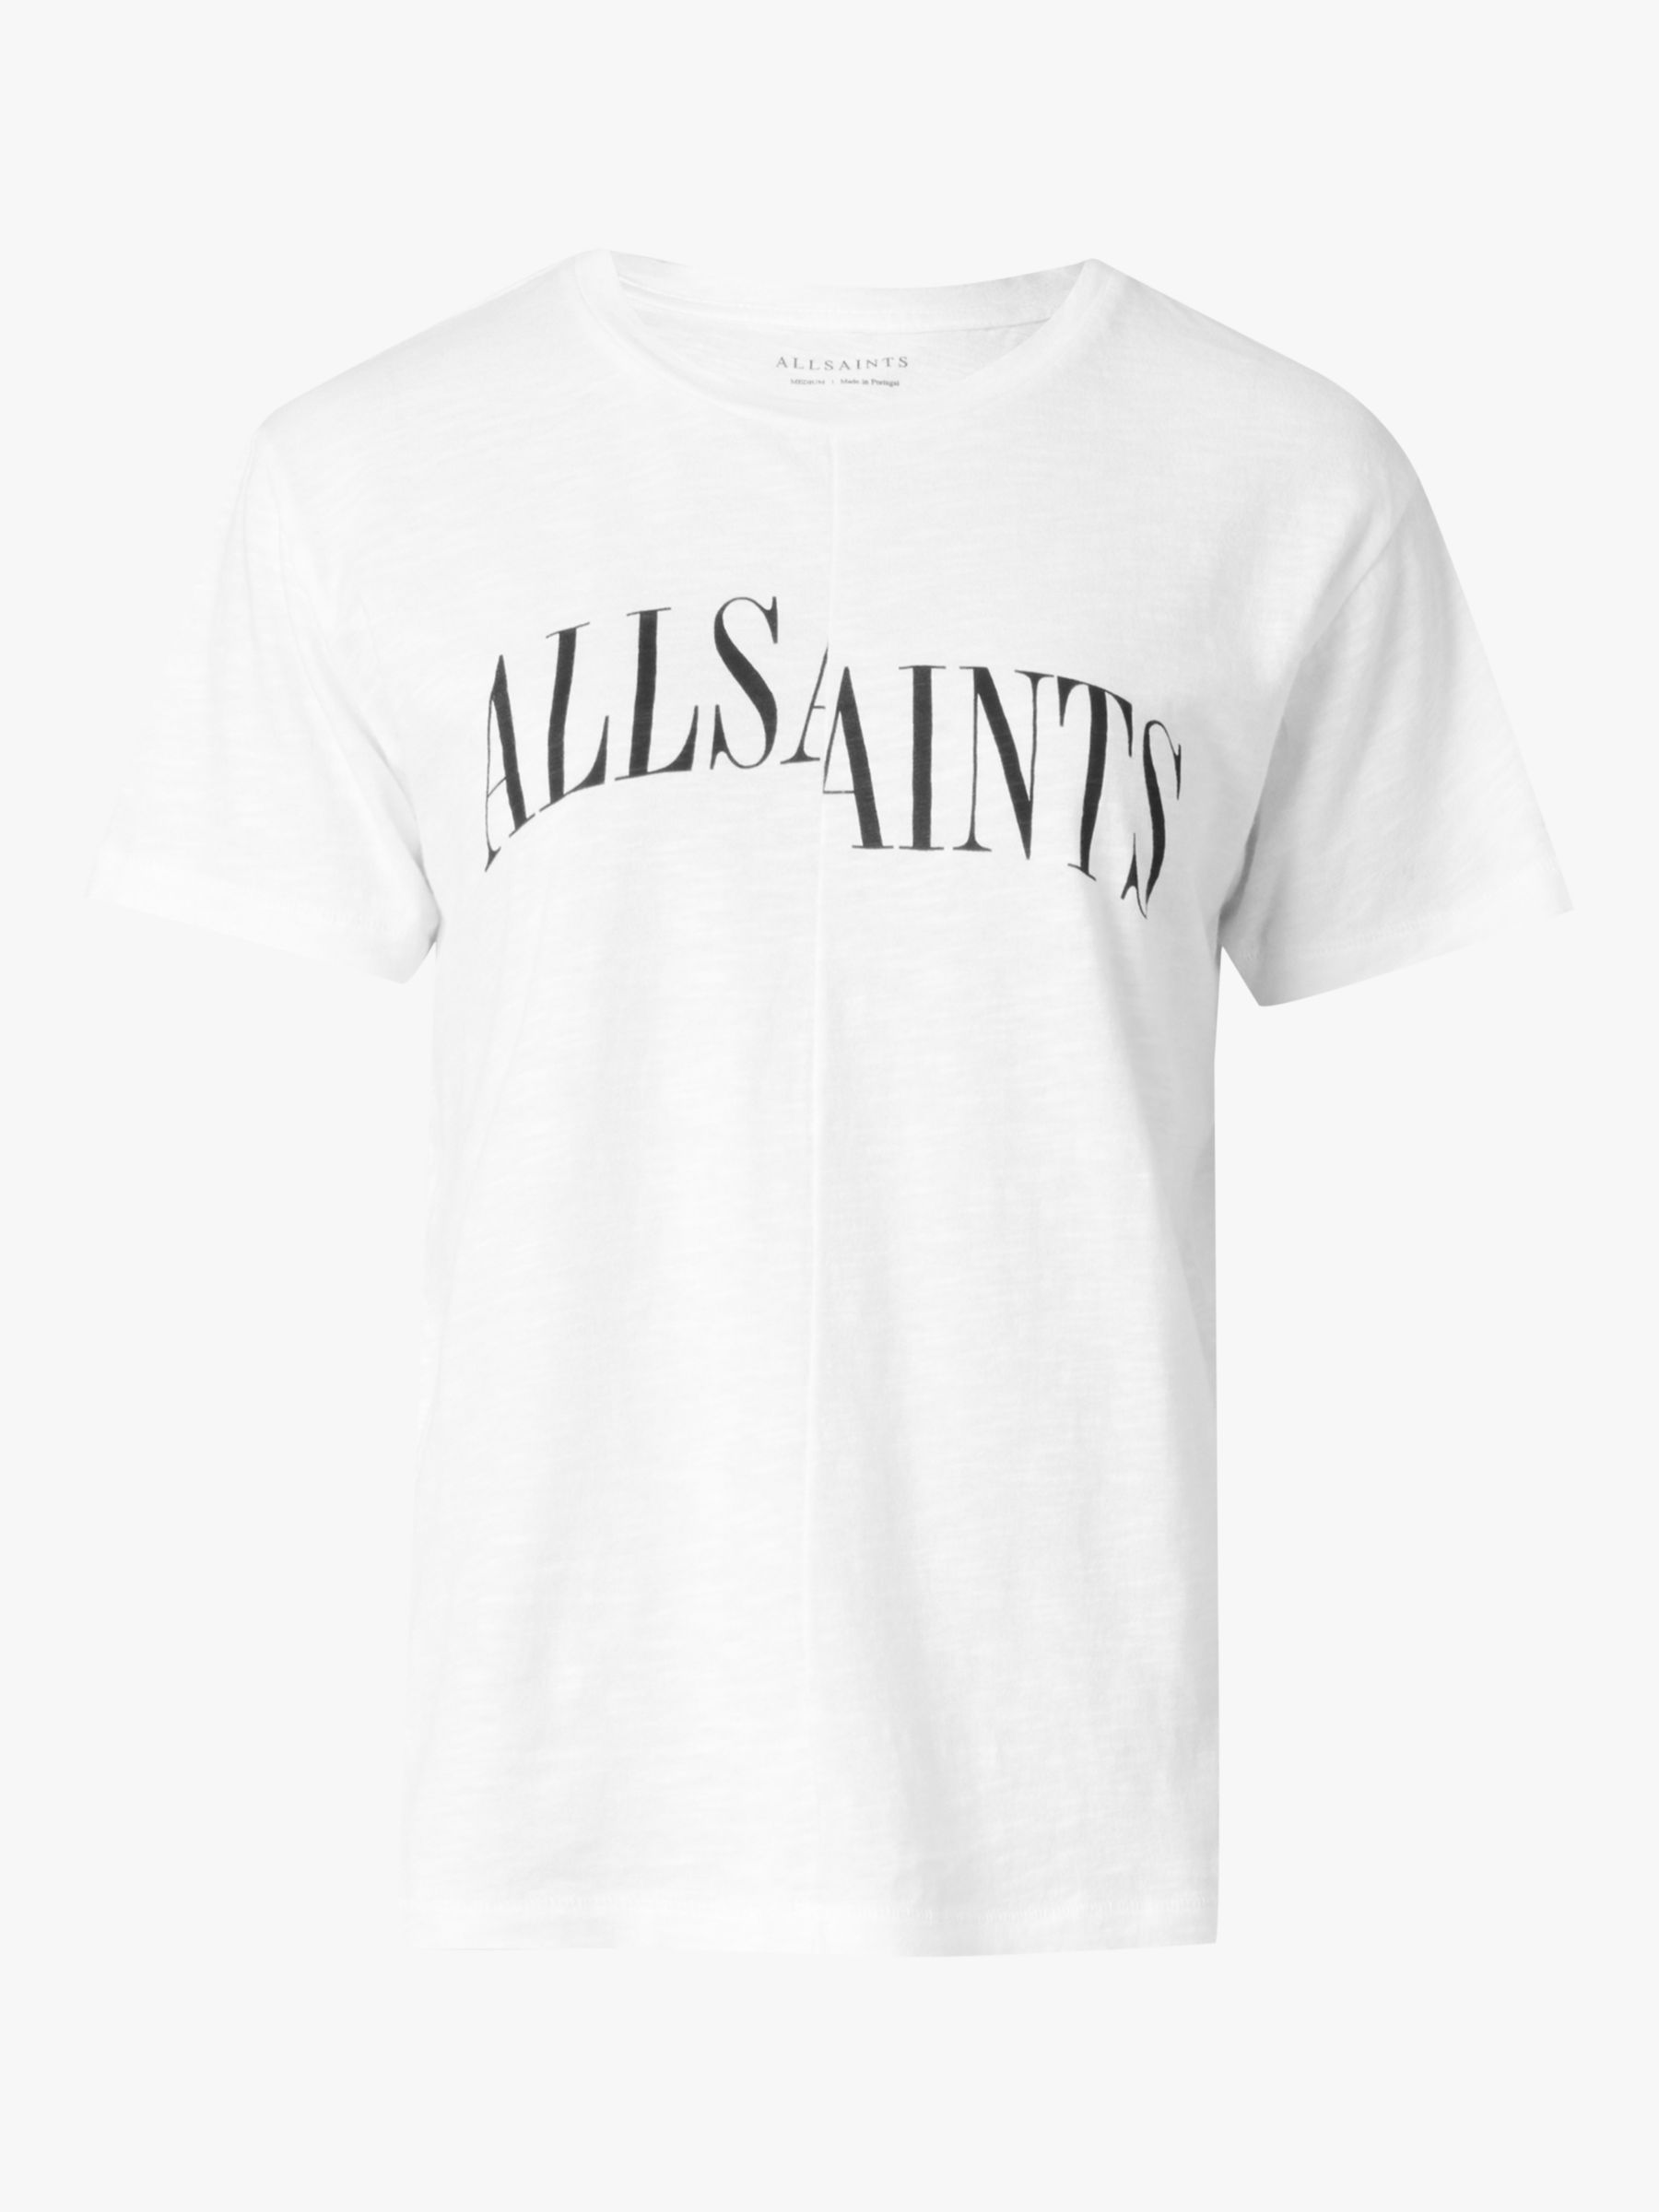 AllSaints Dropout Mic T-Shirt, Optic White at John Lewis & Partners